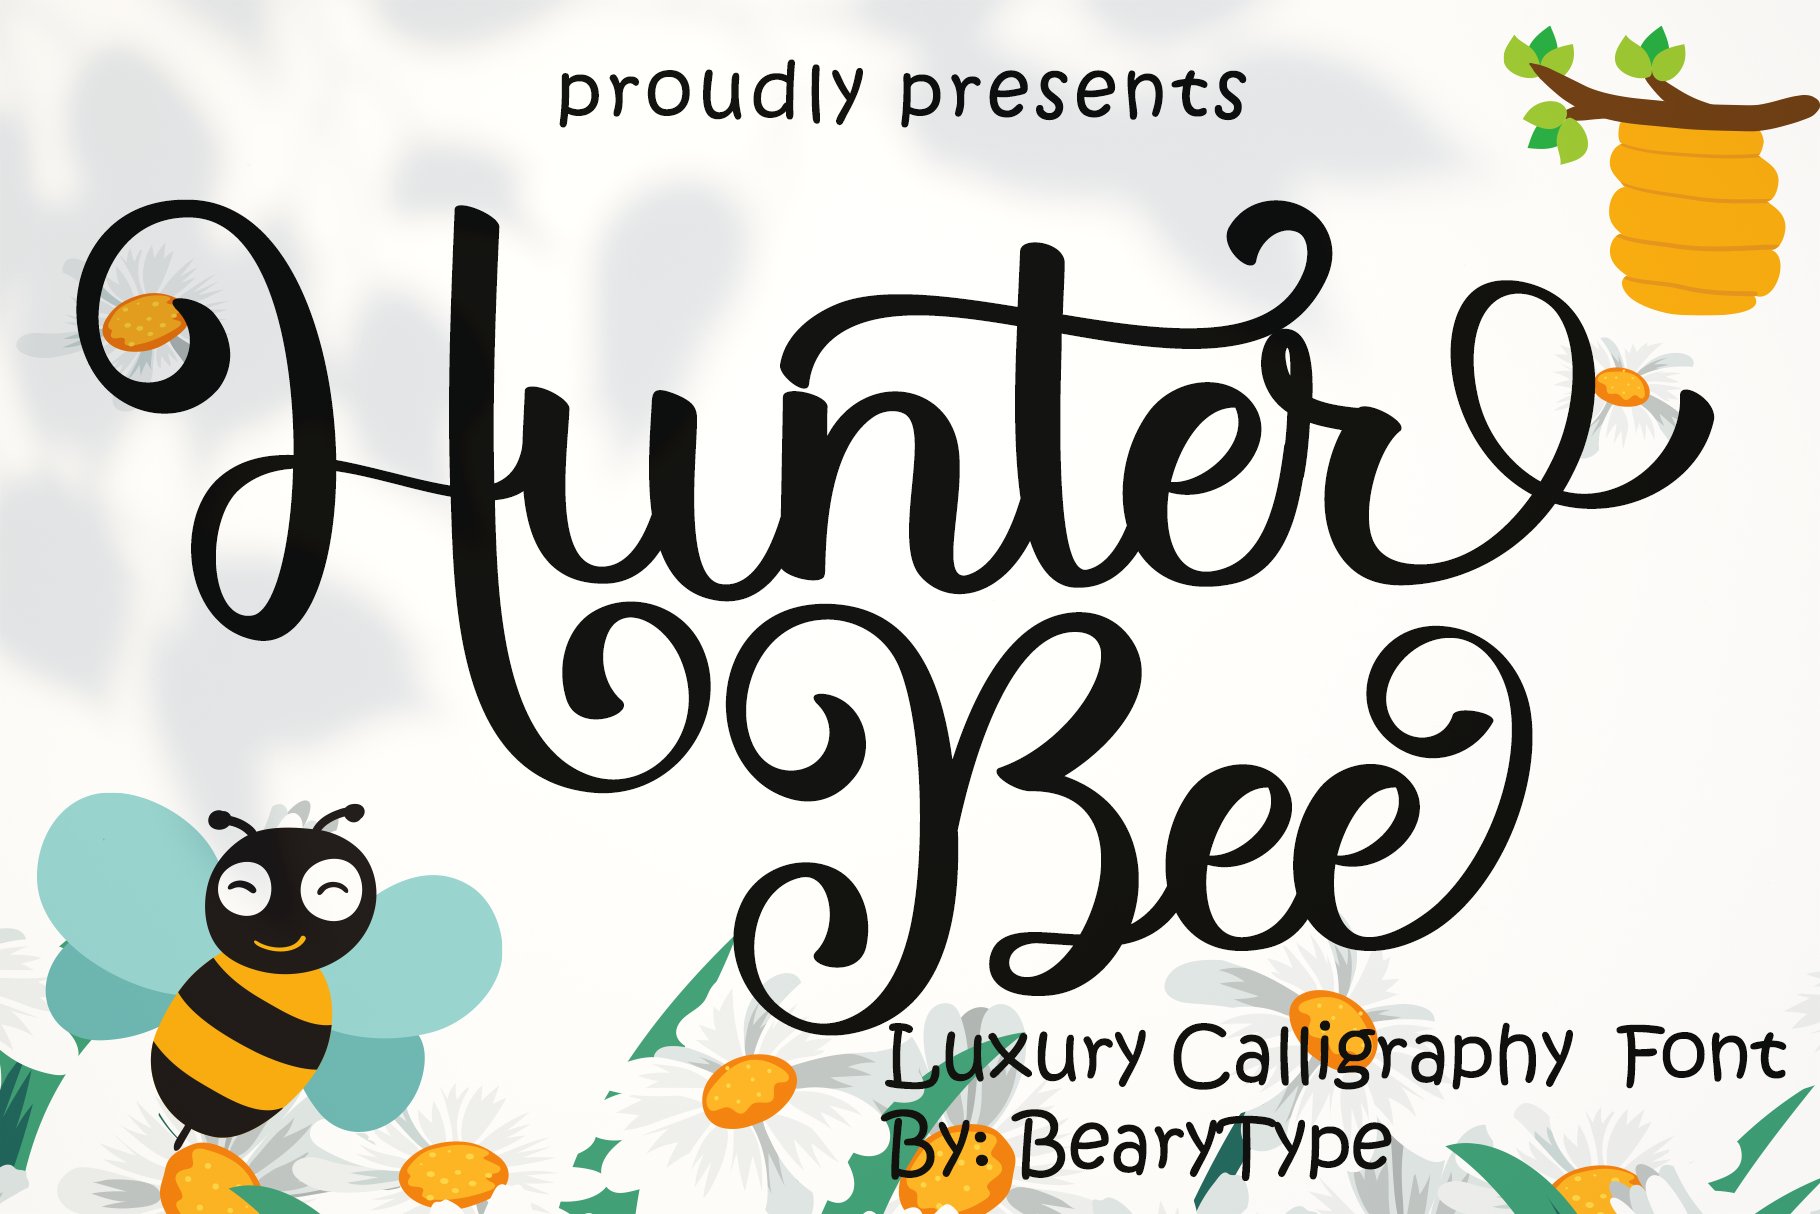 Hunter Bee - Modern Script Font cover image.